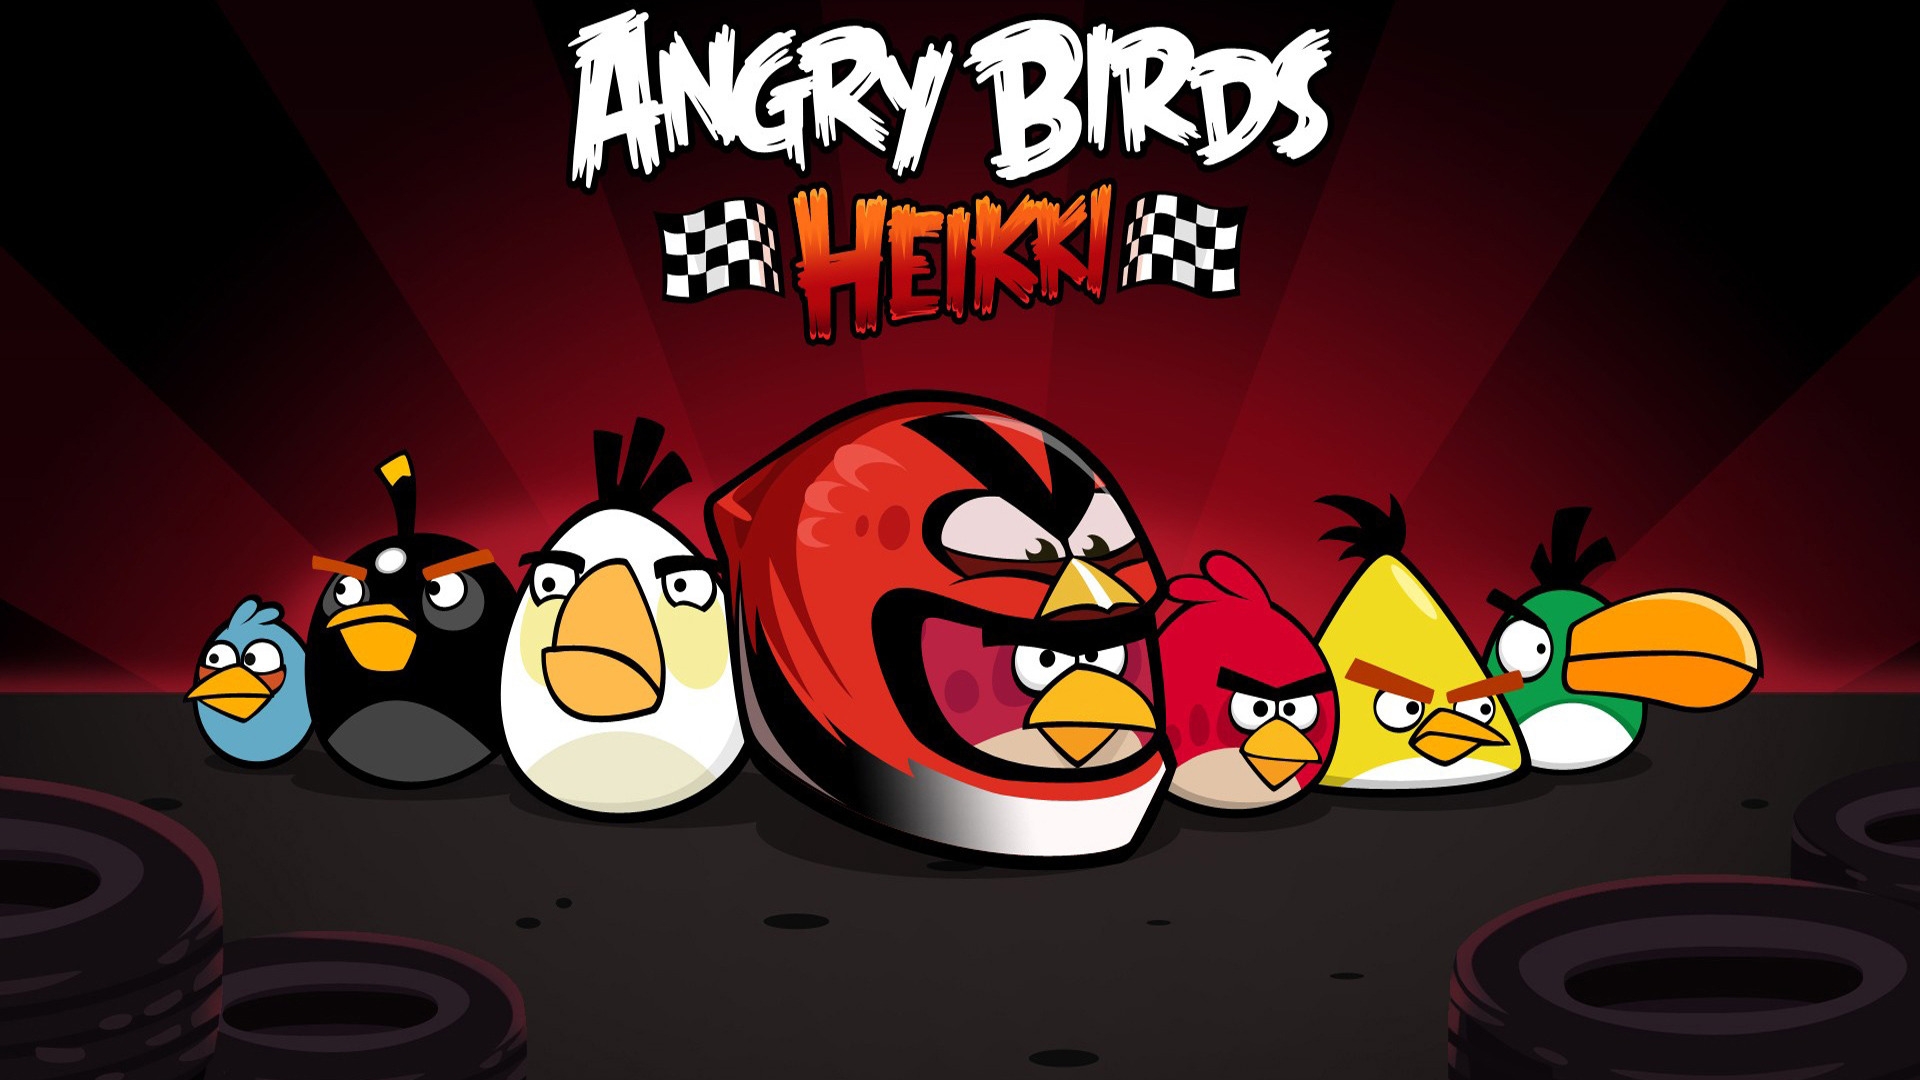 Angry Birds Heikki for 1920 x 1080 HDTV 1080p resolution